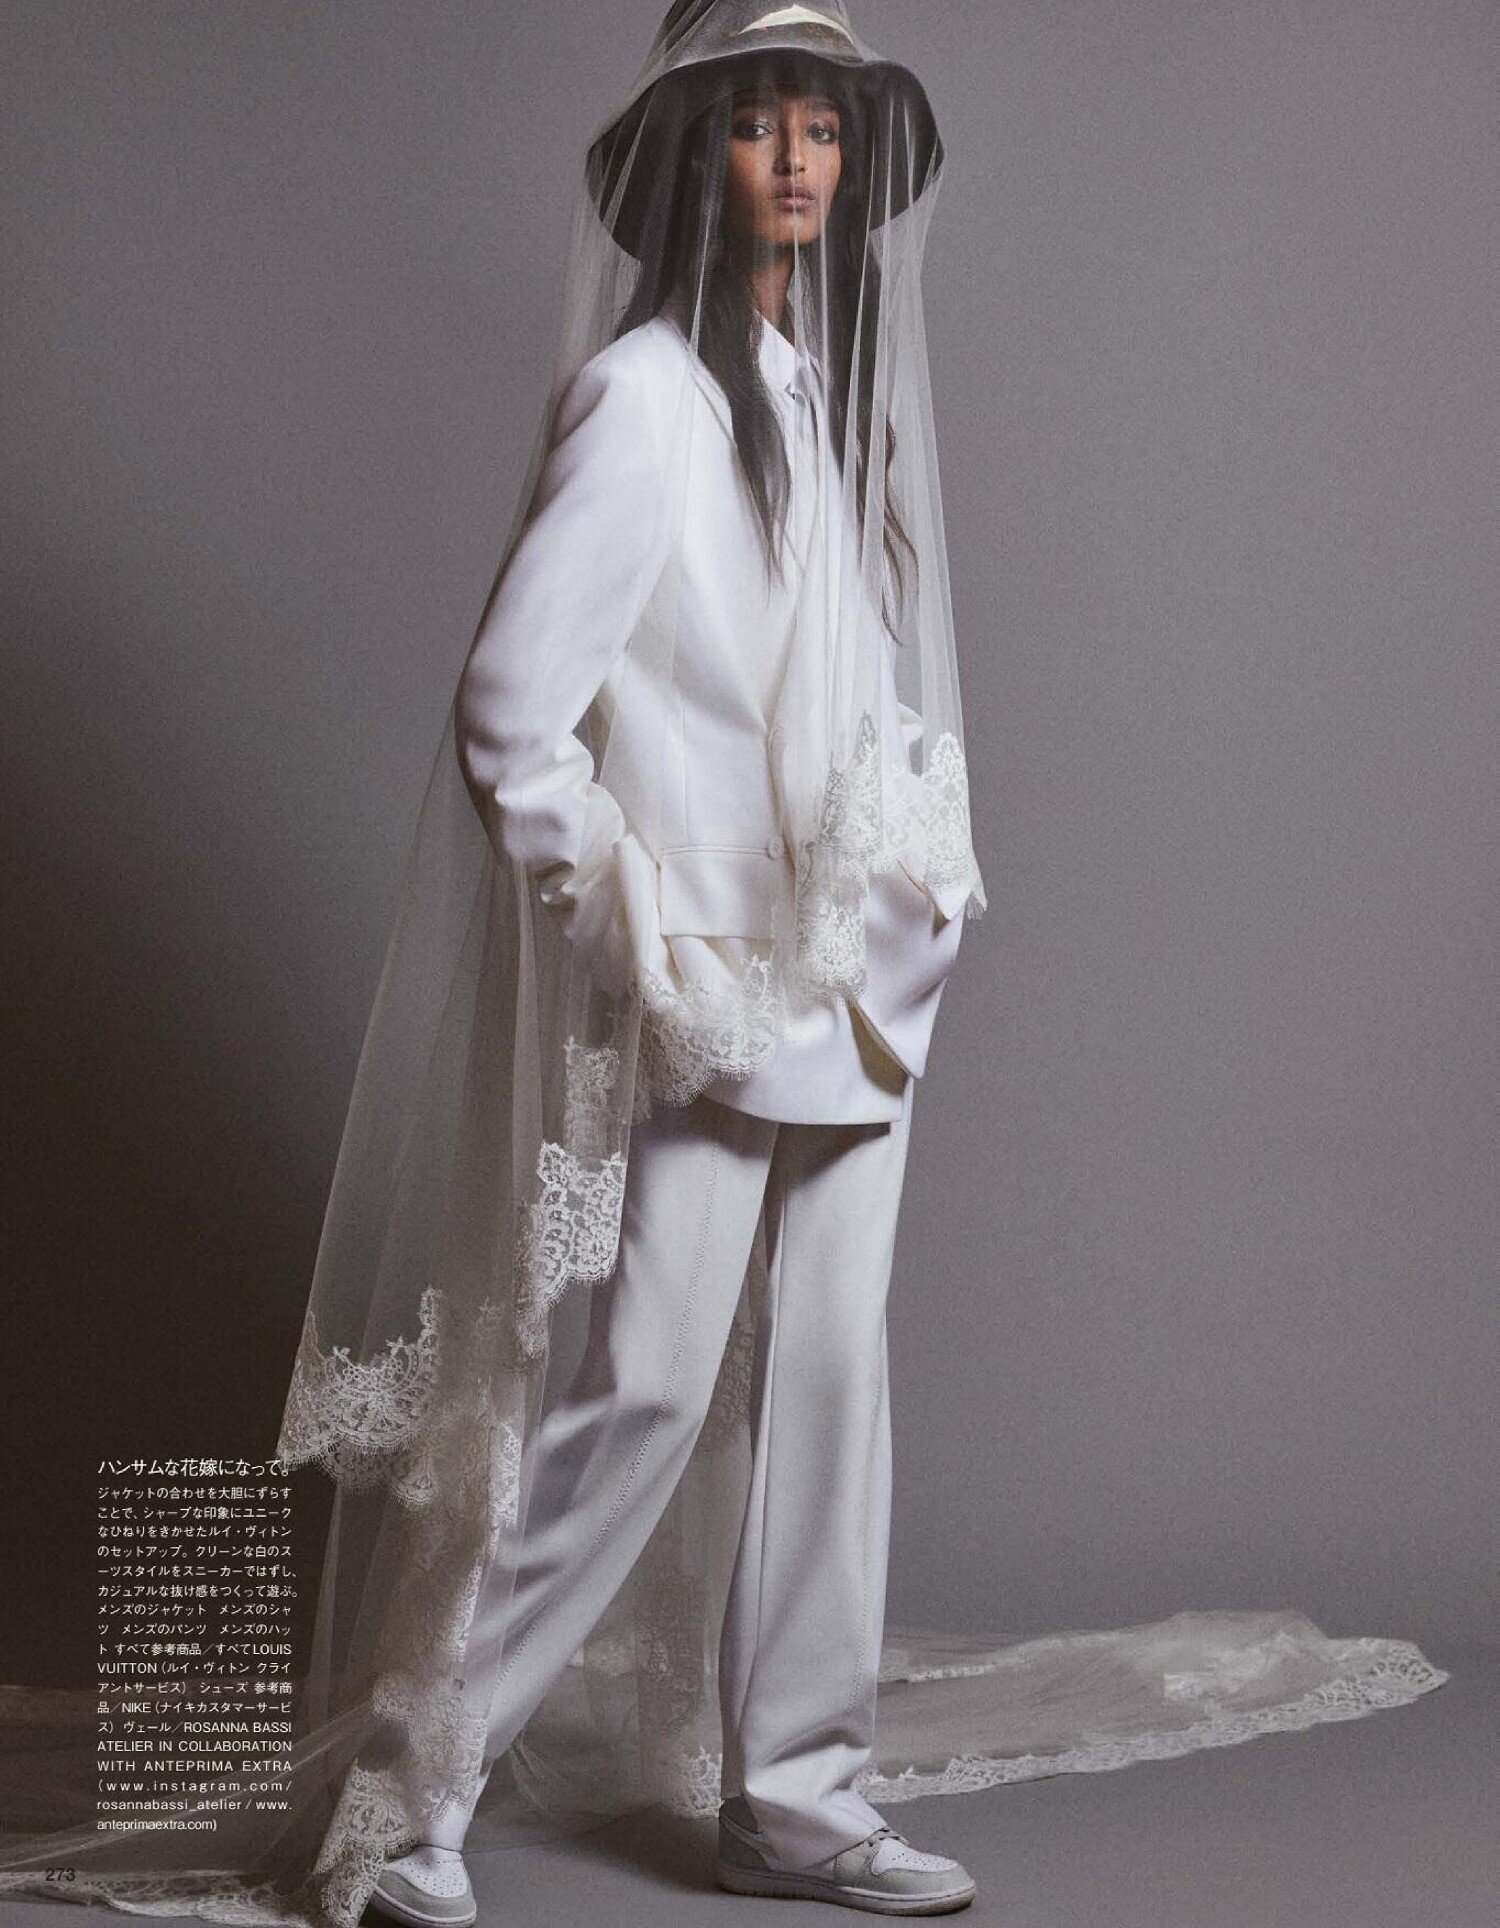 Mona Tougaard by Siampaolo Sgura Vogue Japan Jan 2021 (4).jpg